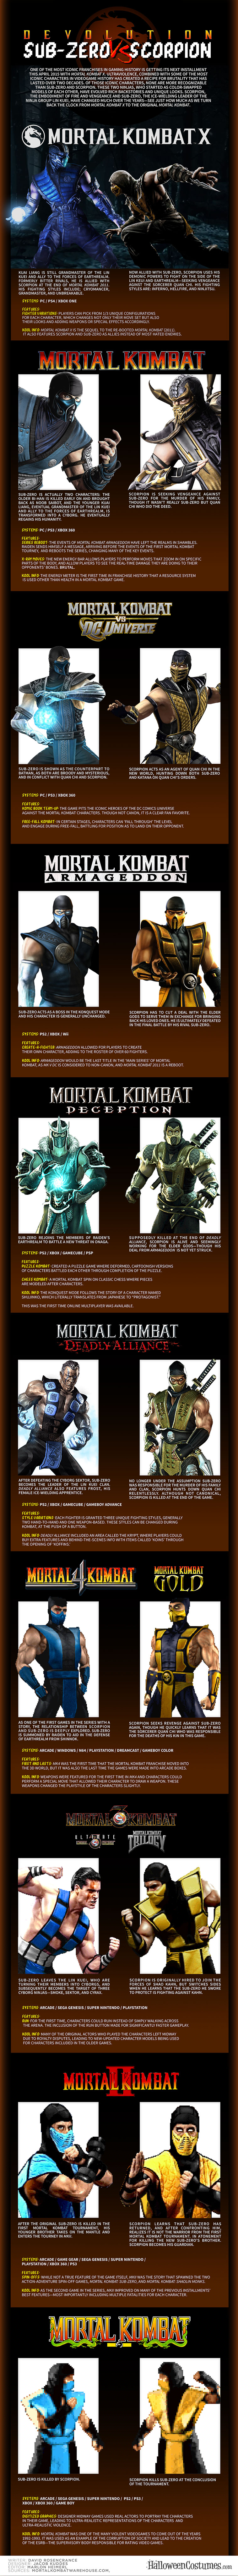 Mortal Kombat Devolution of Sub-Zero and Scorpion Infographic